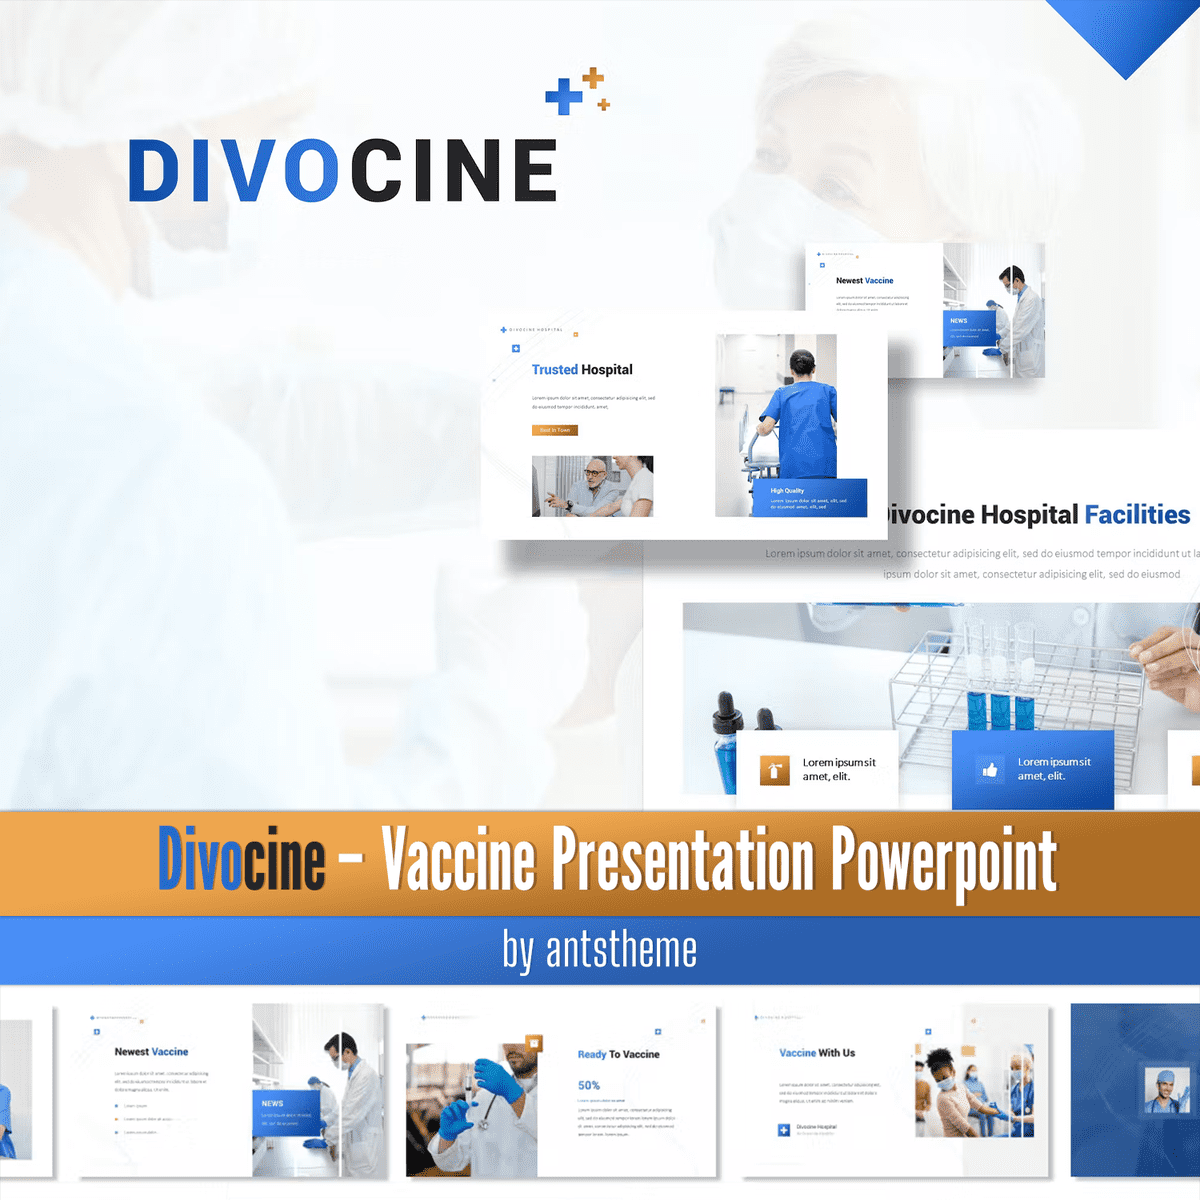 Inscription "Newest Vaccine" on the presentation "Divocine".